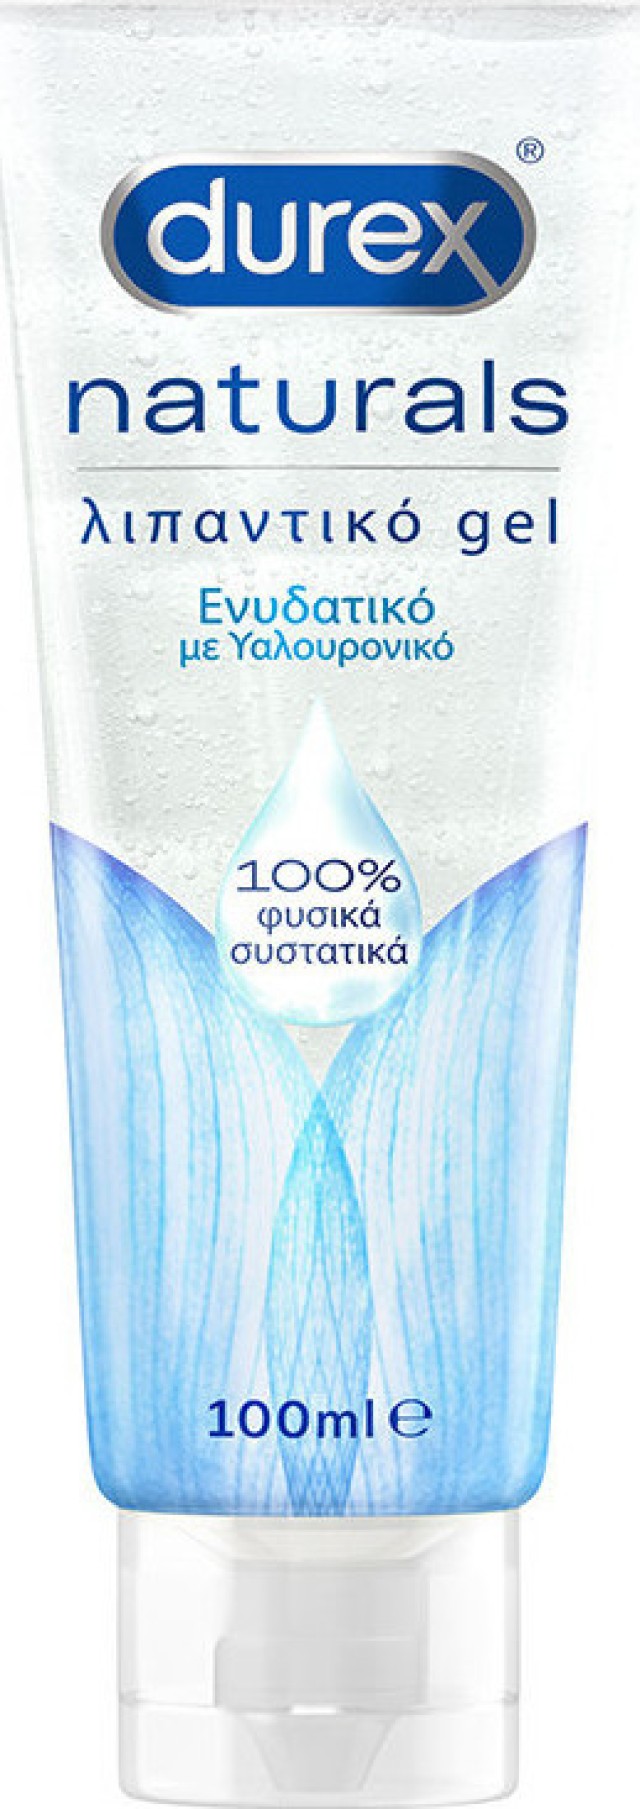 Durex - Naturals Ενυδατικό Λιπαντικό Gel με Υαλουρονικό 100% Φυσικά Συστατικά 100ml